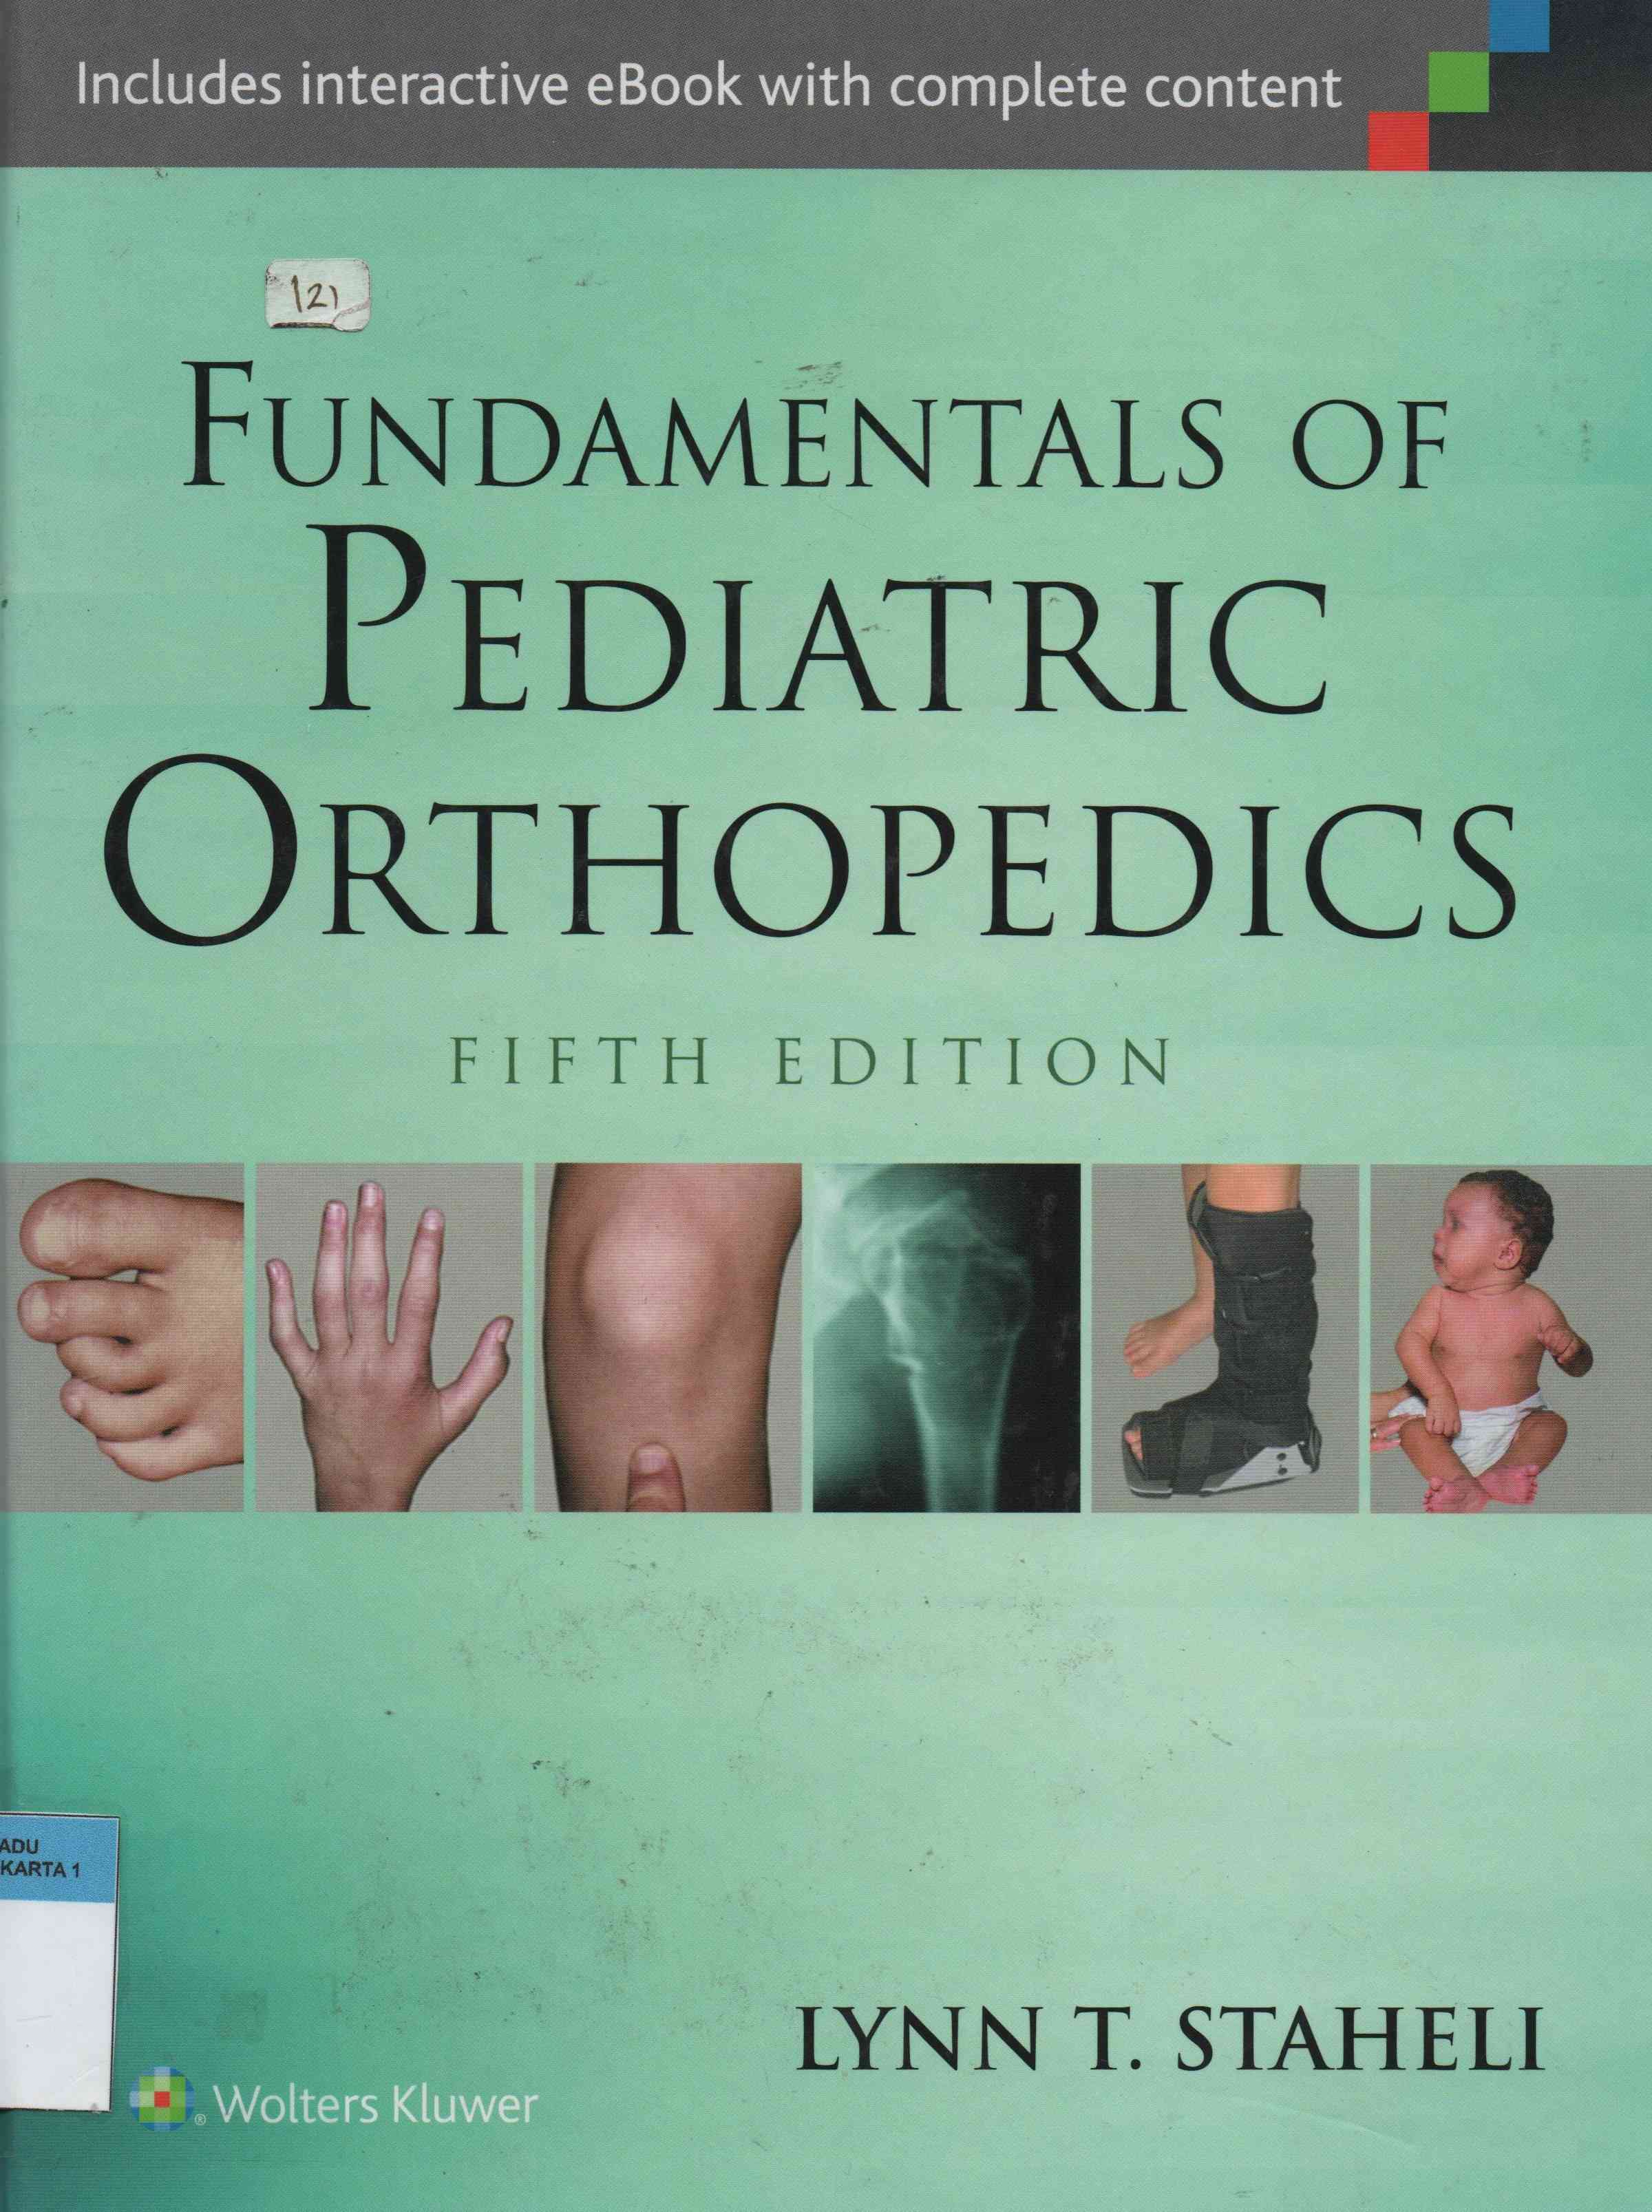 Fundamental of pediatric orthopedics (Fifth Edition)